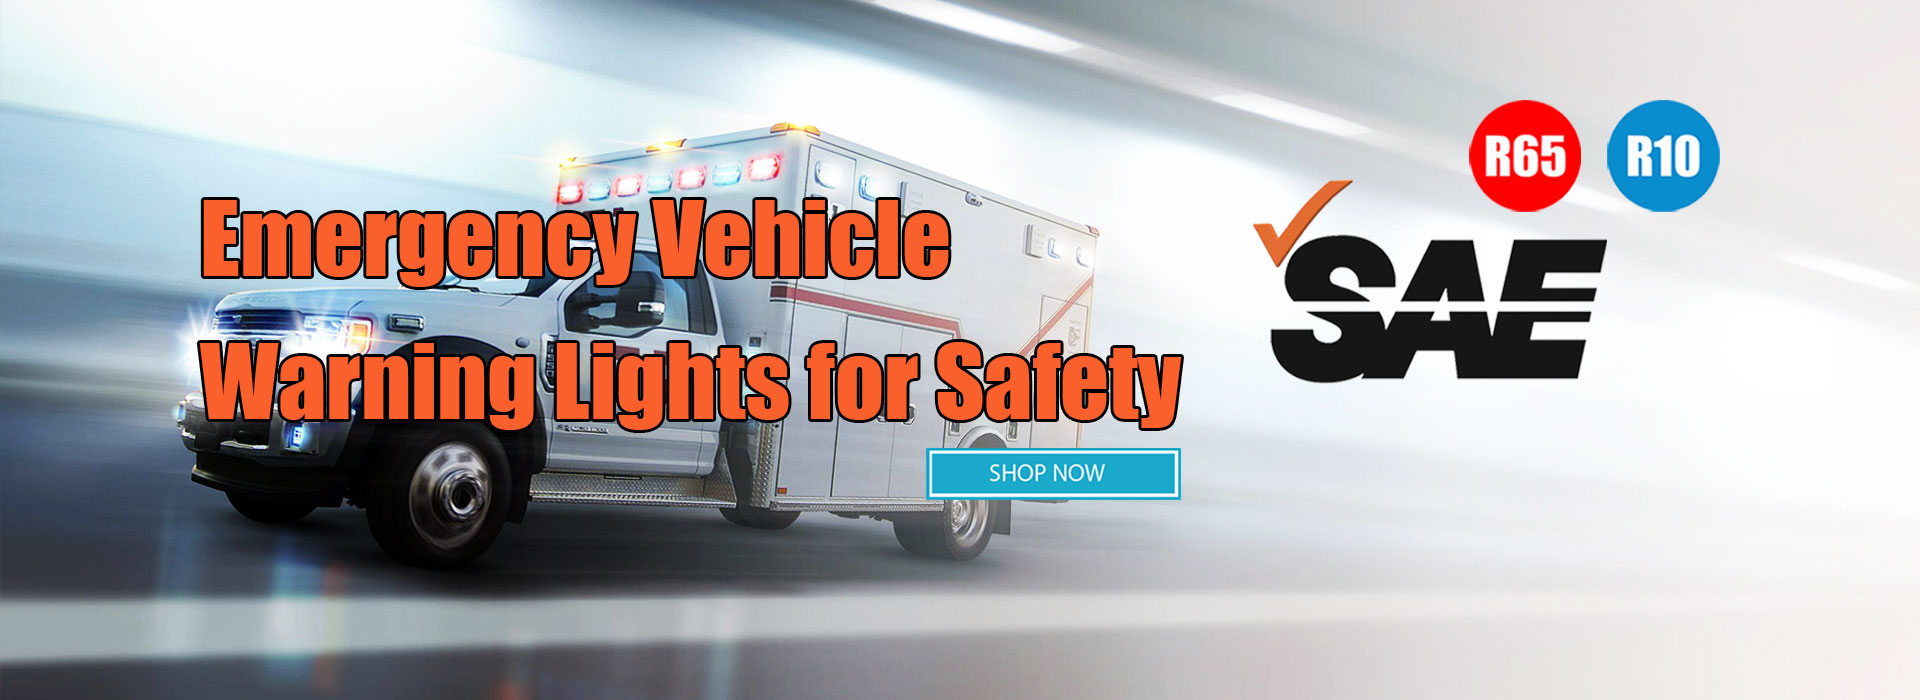 Emergency Vehicle Warning Lights